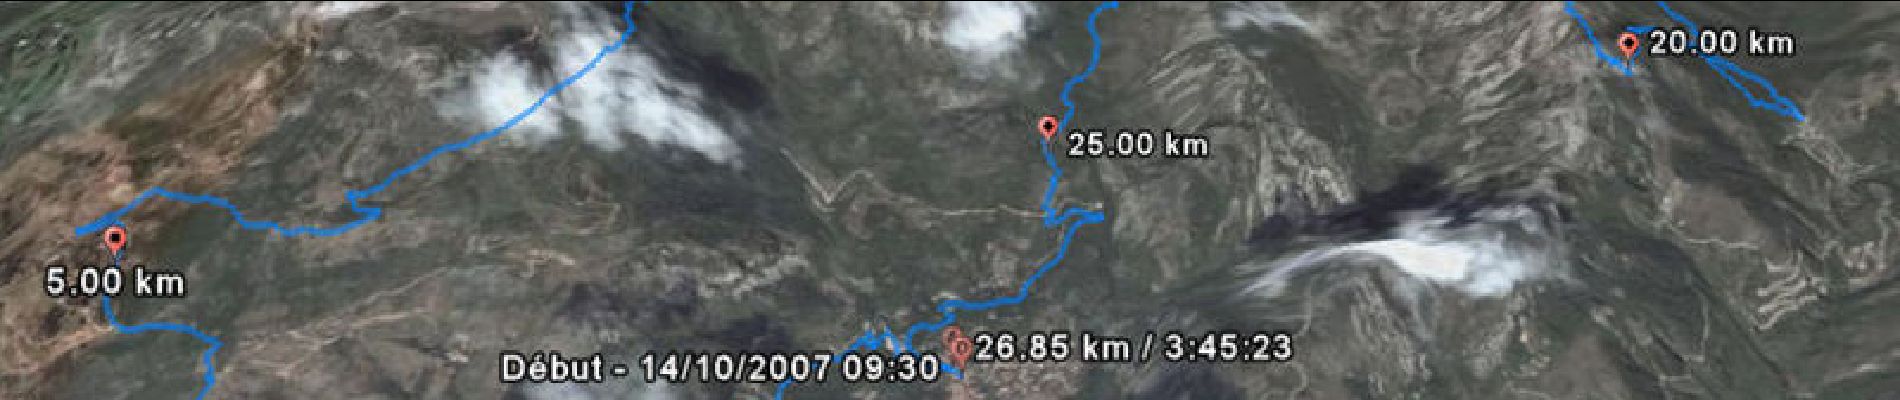 Trail Running Gorbio - Trail de Gorbio 32km 2007 - Photo